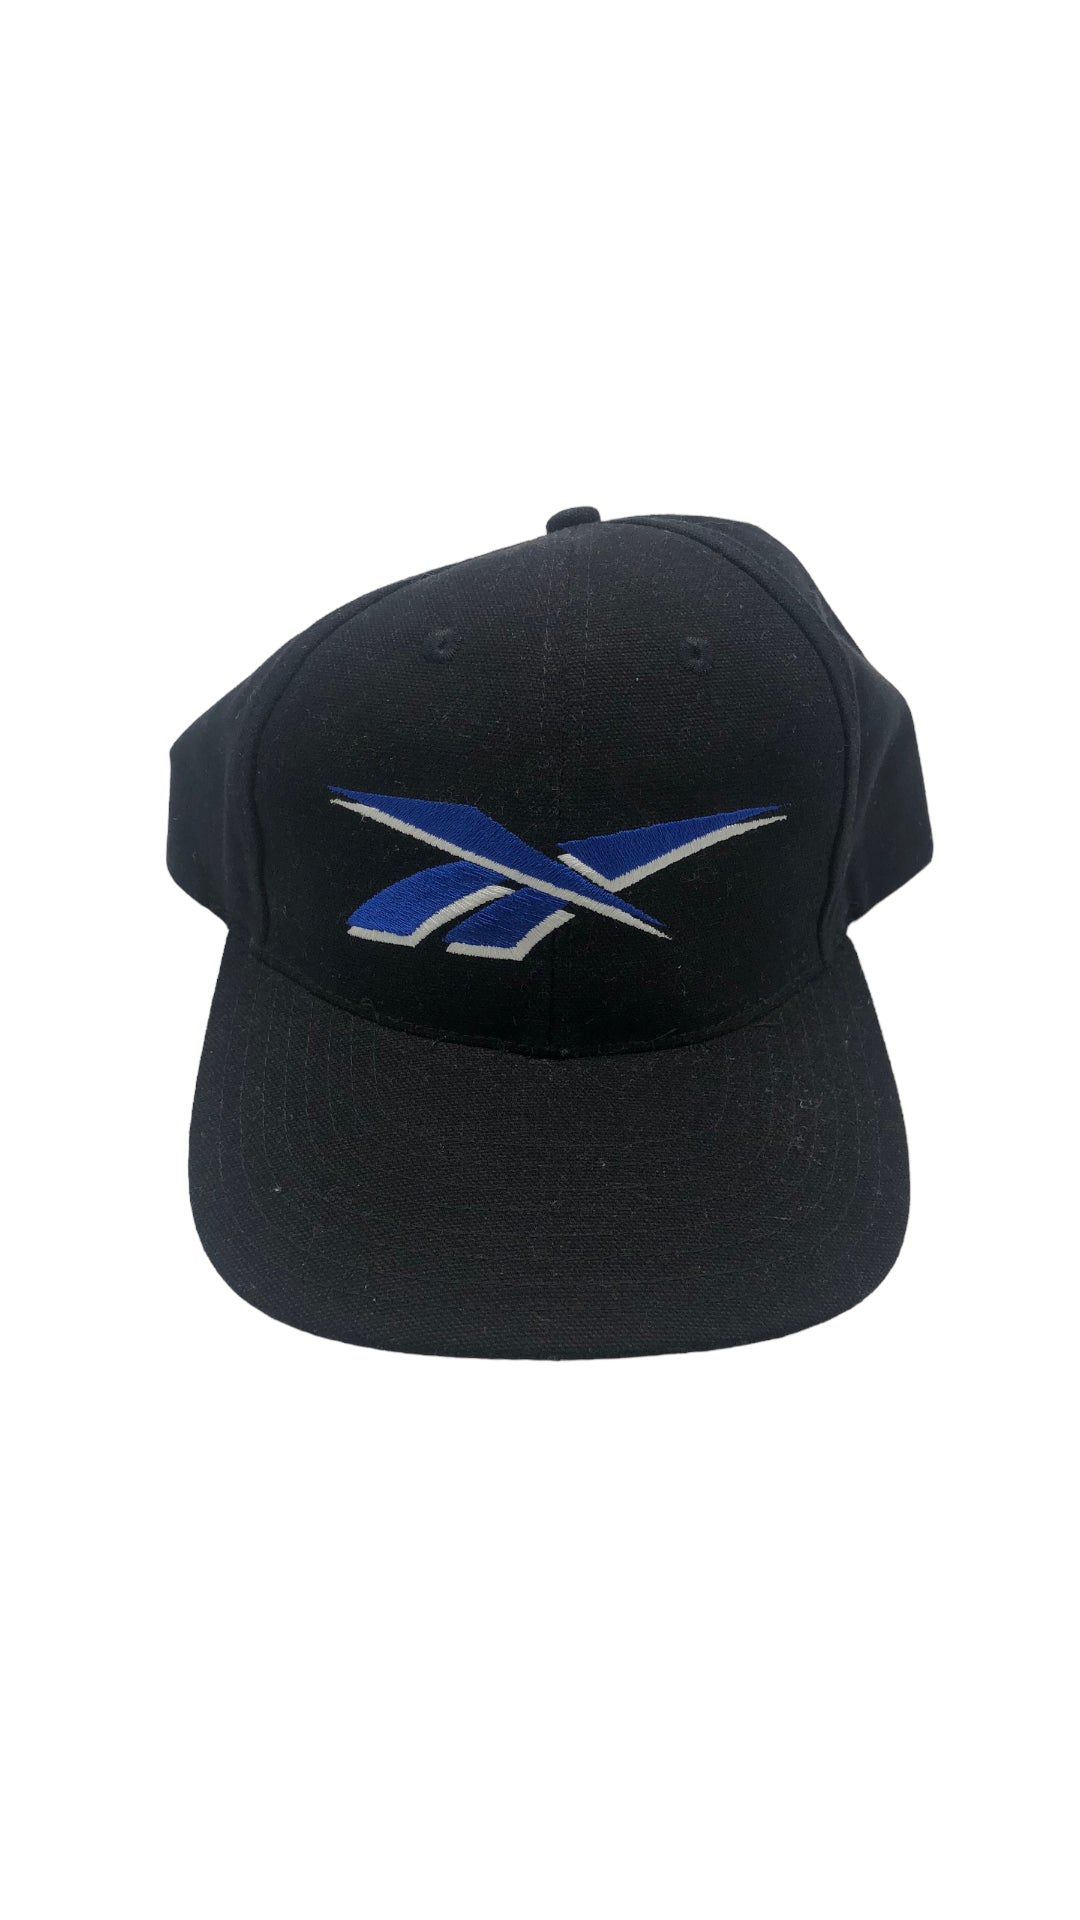 VTG Blue Reebok SnapBack Hat